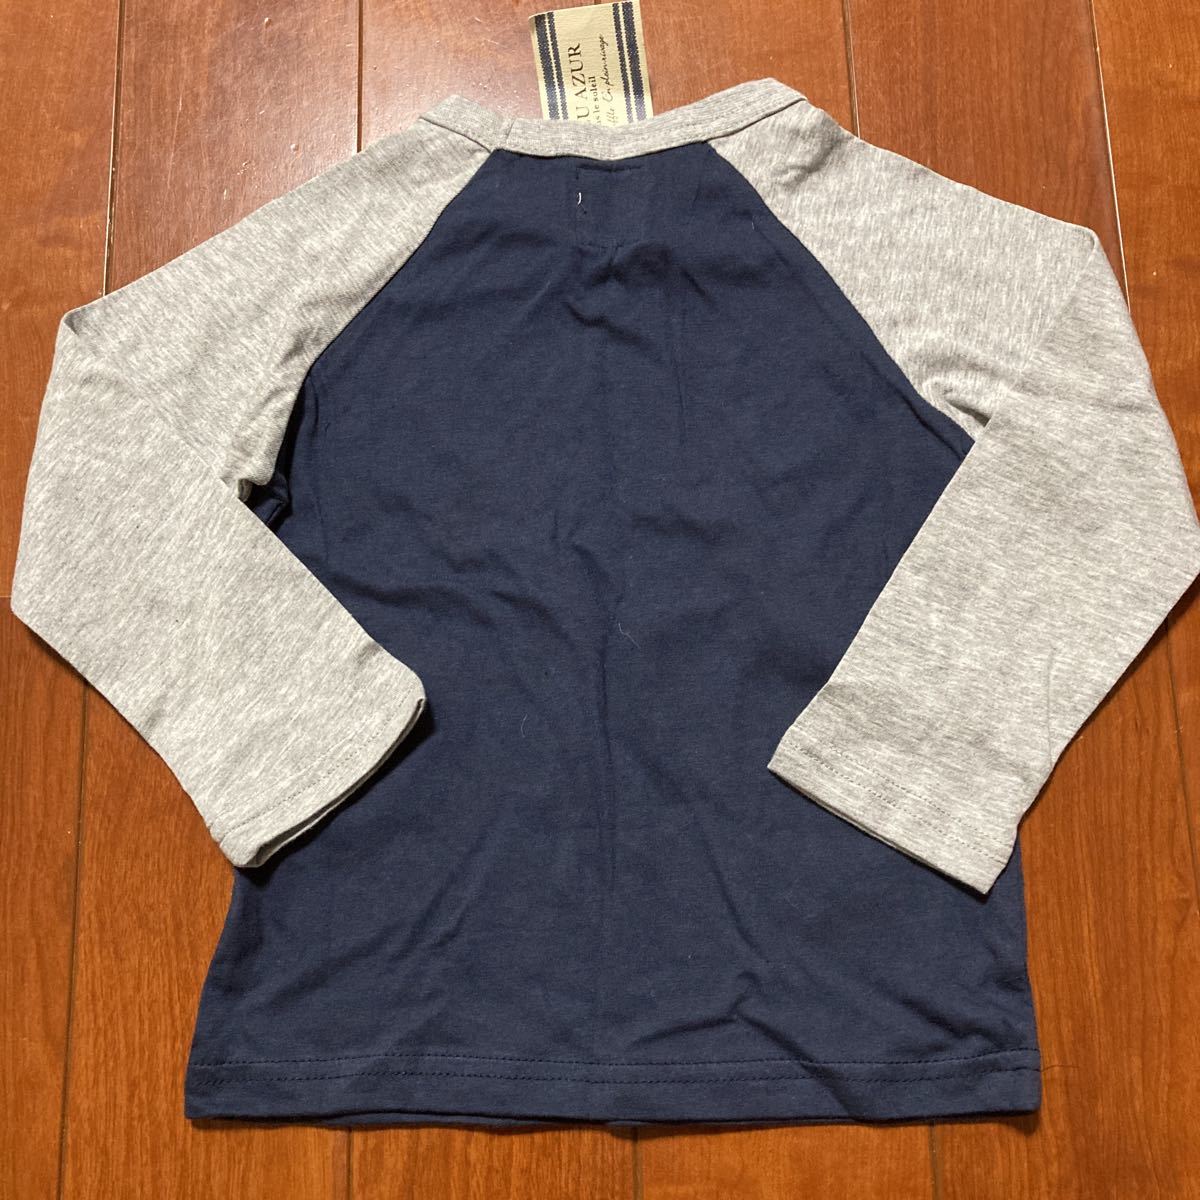 AZUR・ブルー アズール・長袖Tシャツ・ネイビー×グレー・100・定価3360円